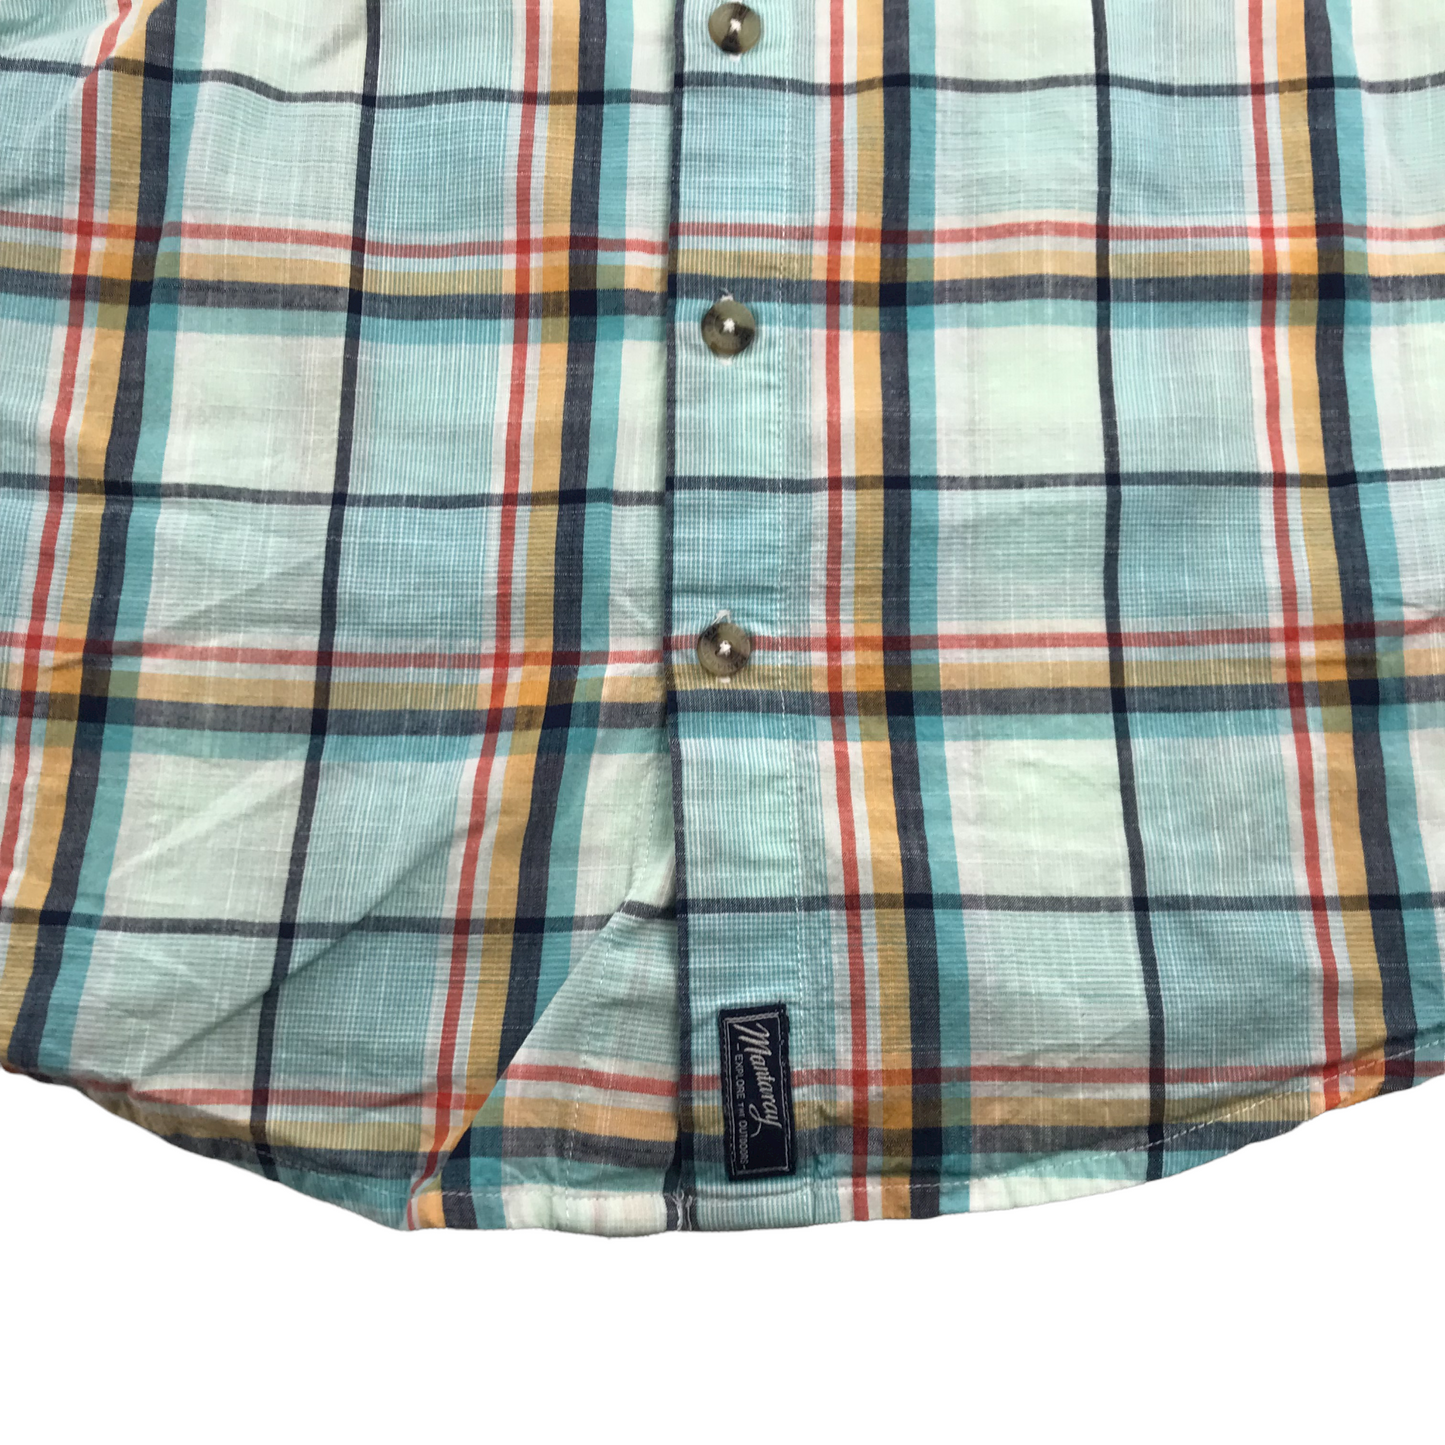 Mantaray Light Blue and Colourful Checked Short Sleeve Shirt Age 13